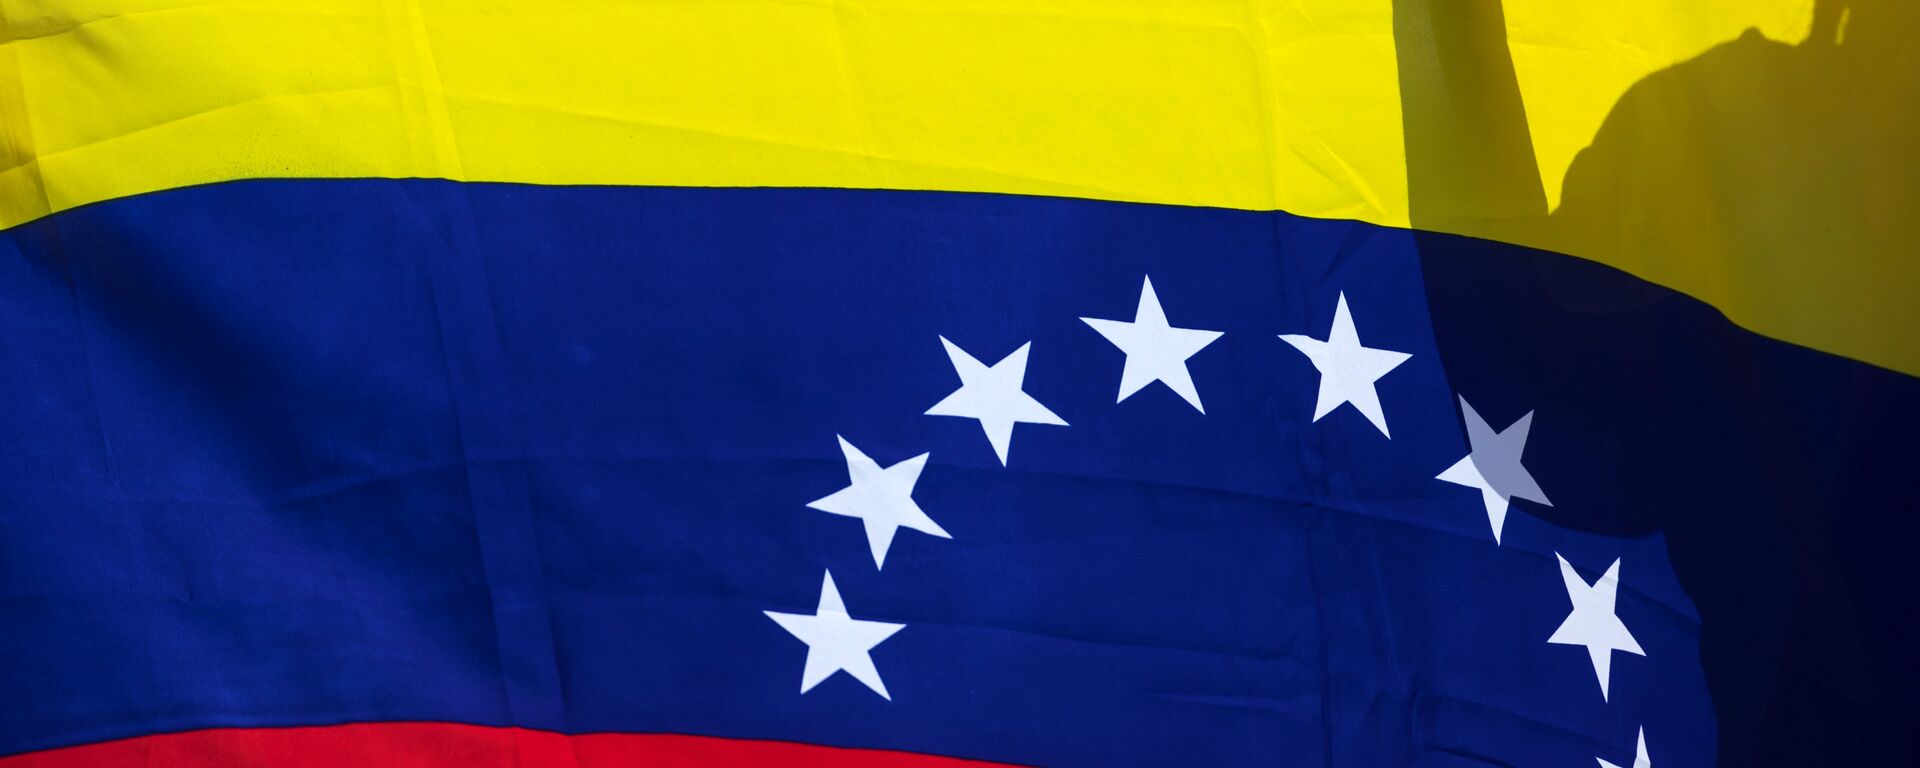 Bandera de Venezuela - Sputnik Mundo, 1920, 20.11.2021